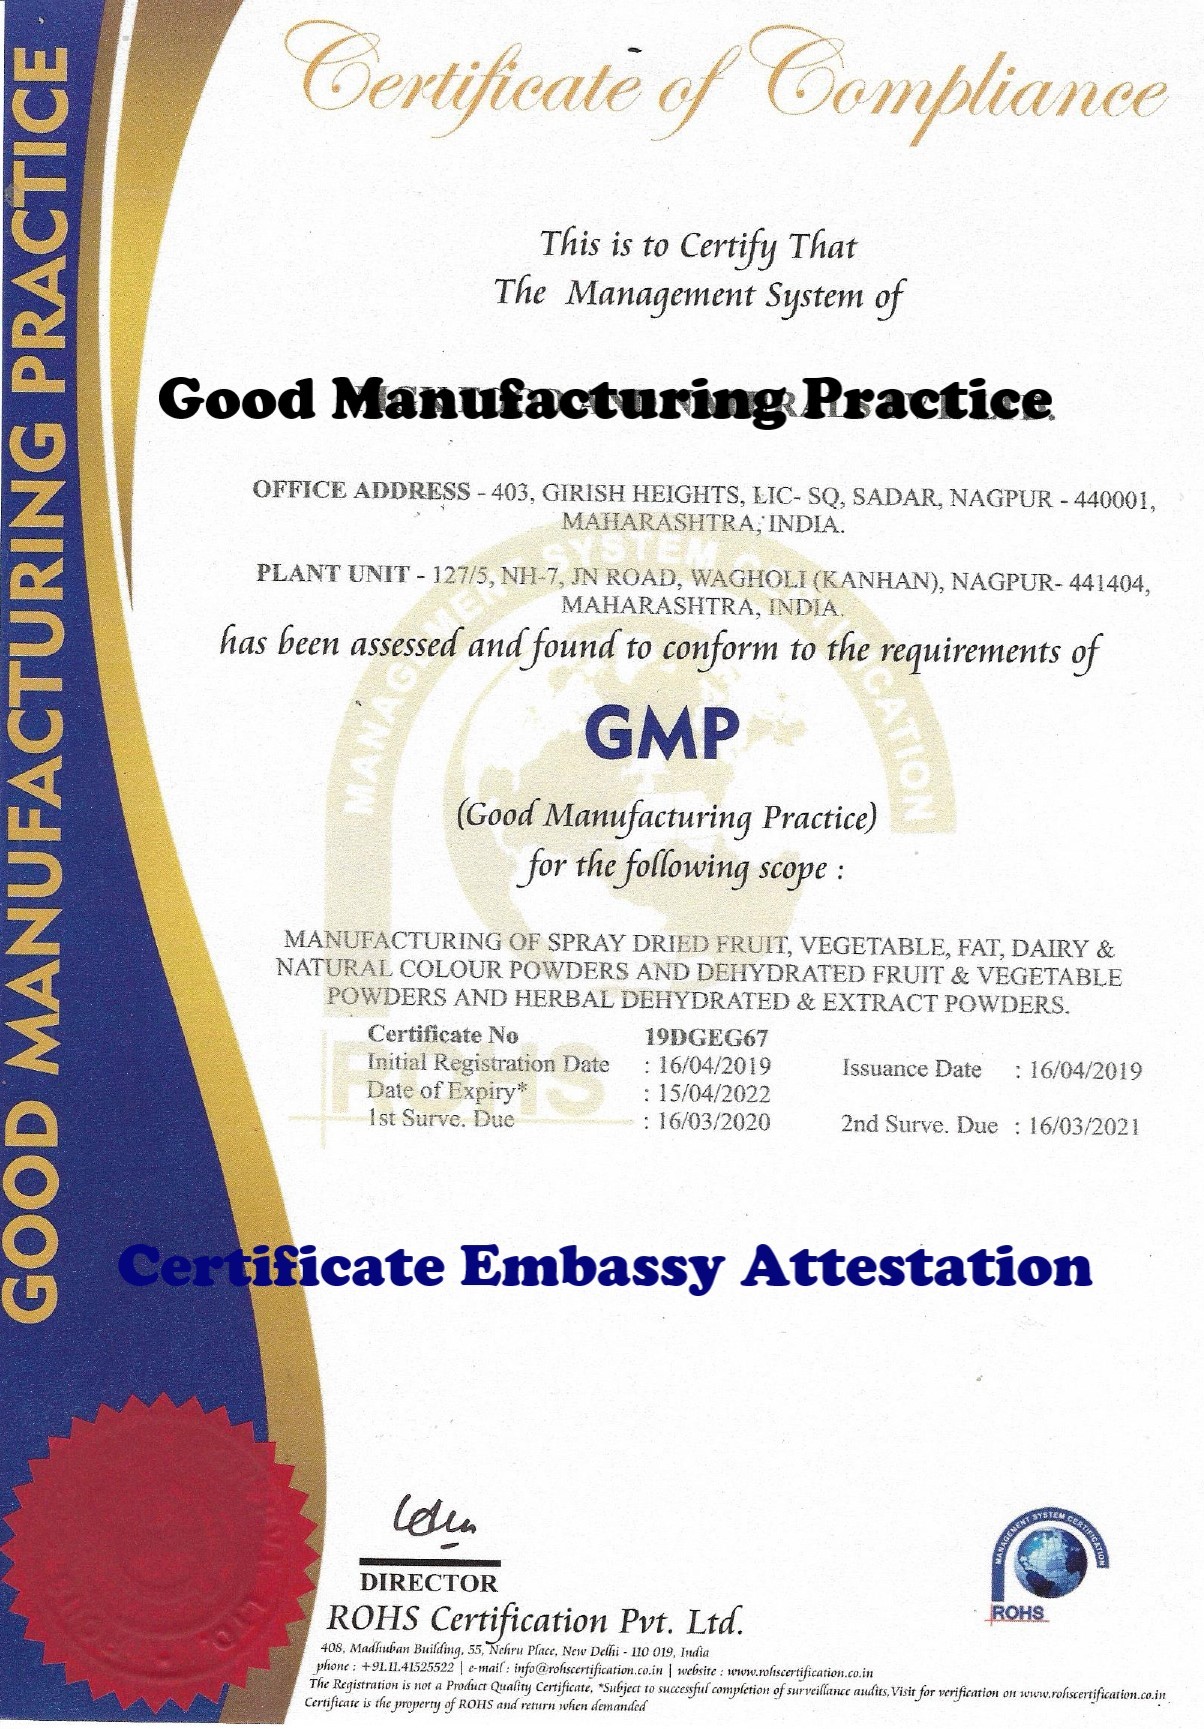 GMP Certificate Attestation from Saudi Arabia Embassy